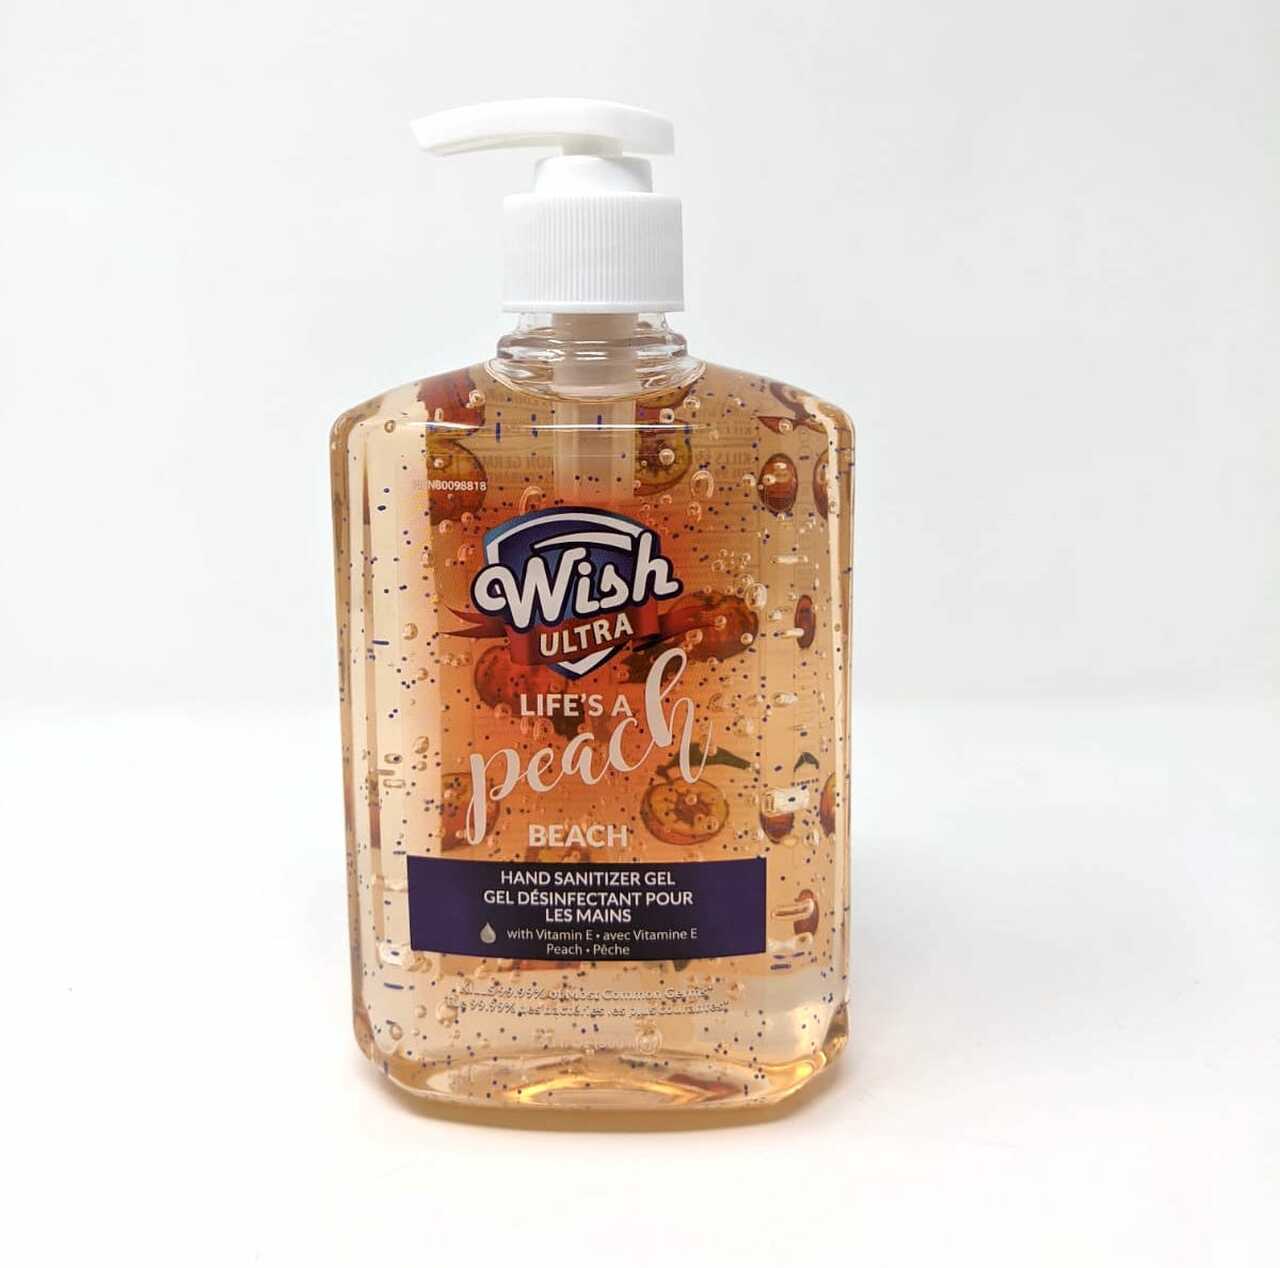 Wish Hand Sanitizer - Peach Flavor (16.9 oz.)(96 Cases = 960 ct. per Pallet) (Unit Price - $1)